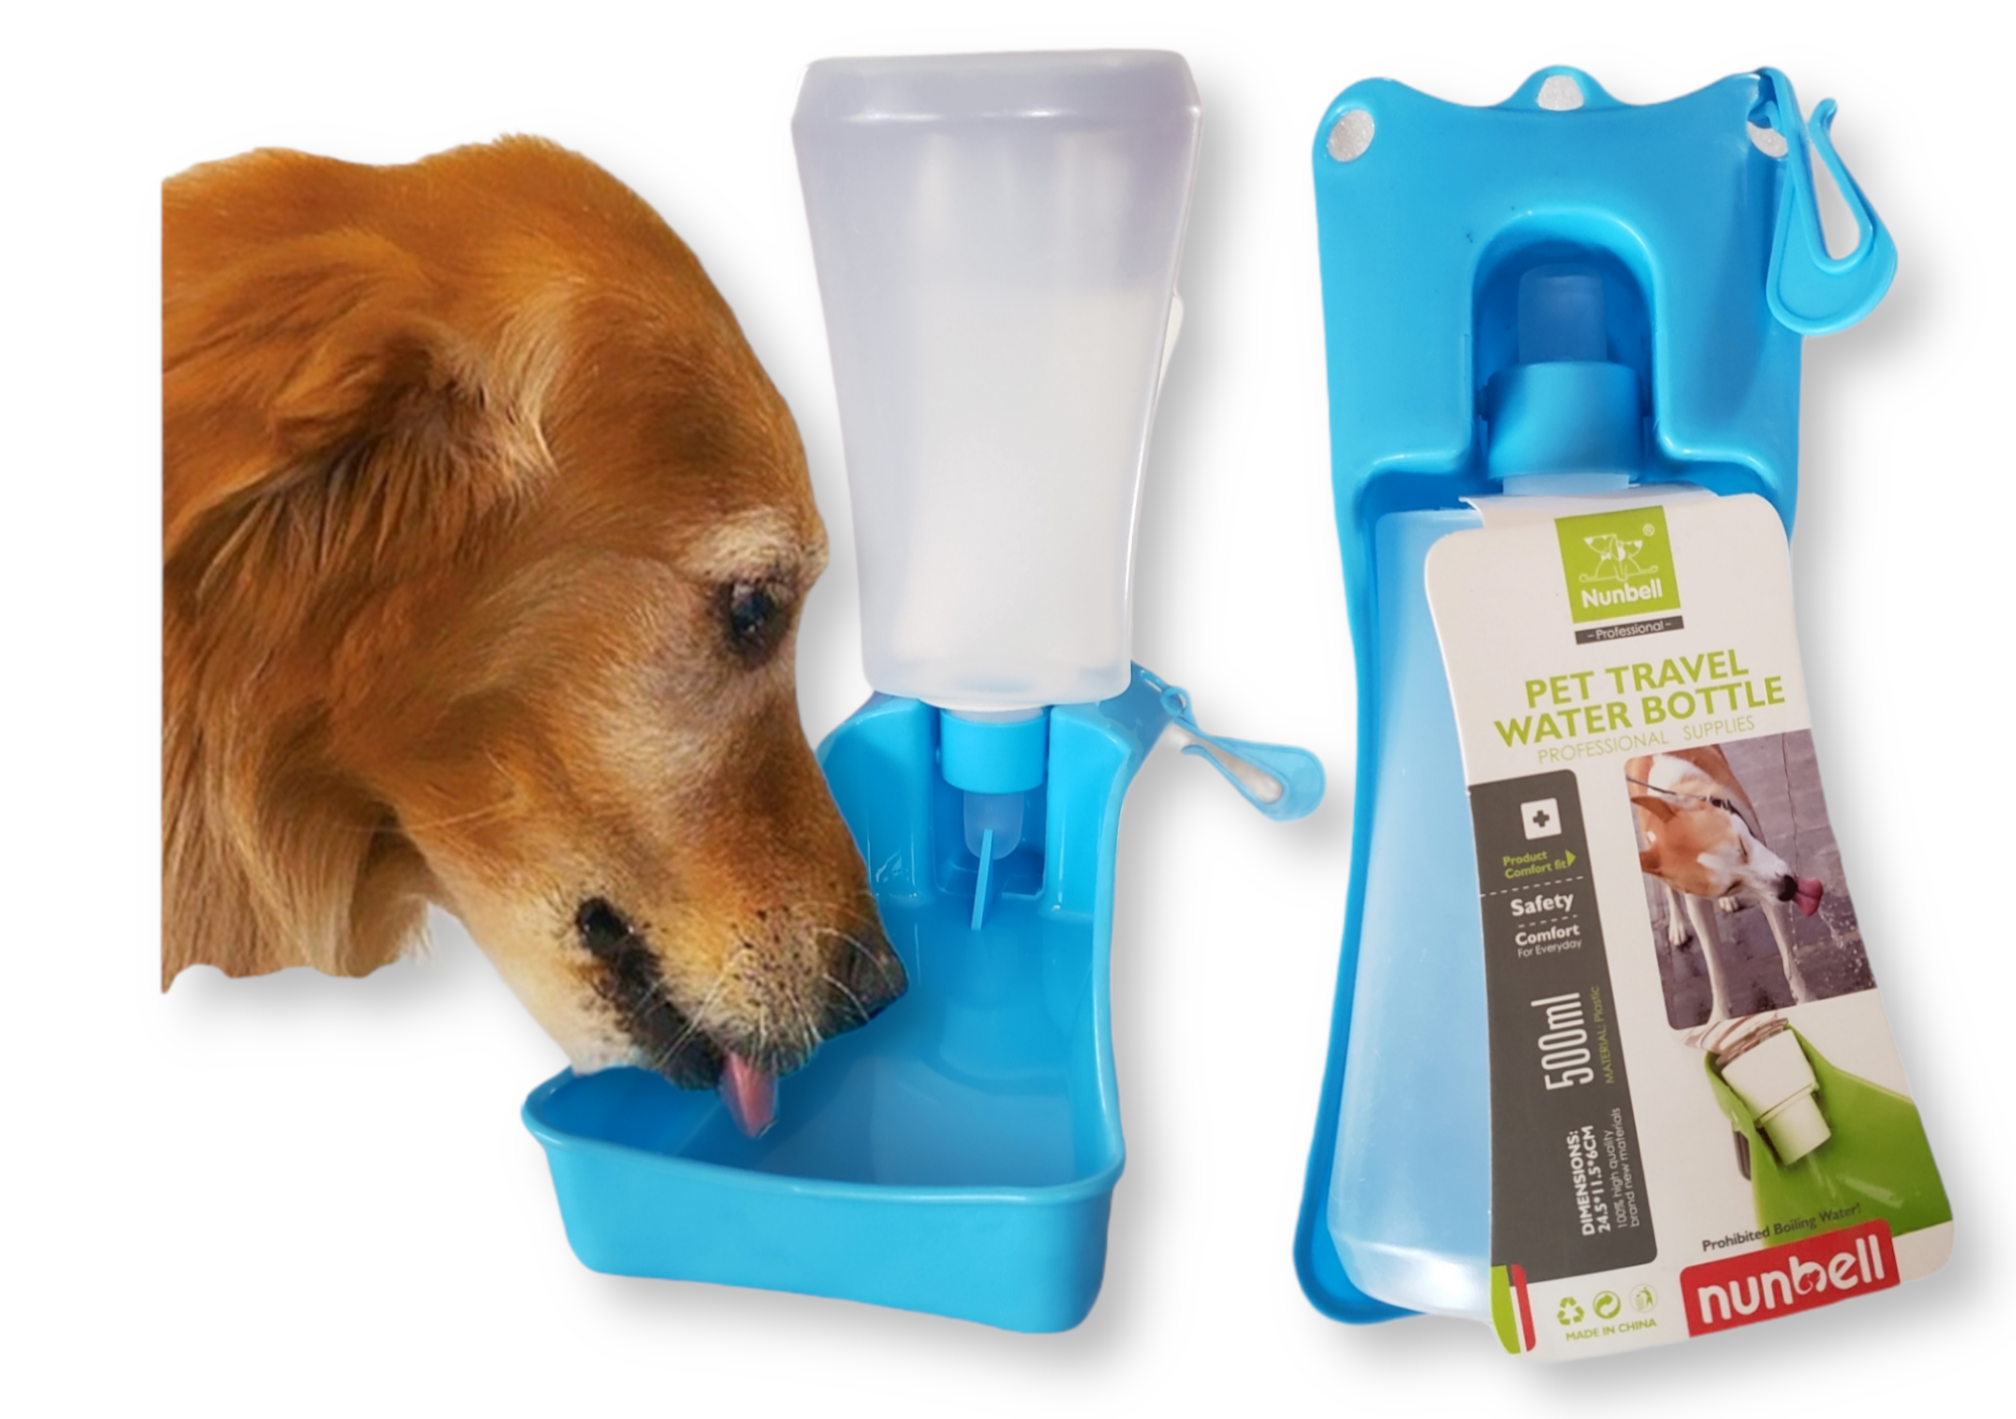 Botella Bebedero Portátil Agua Para Perros Mascotas 500ml